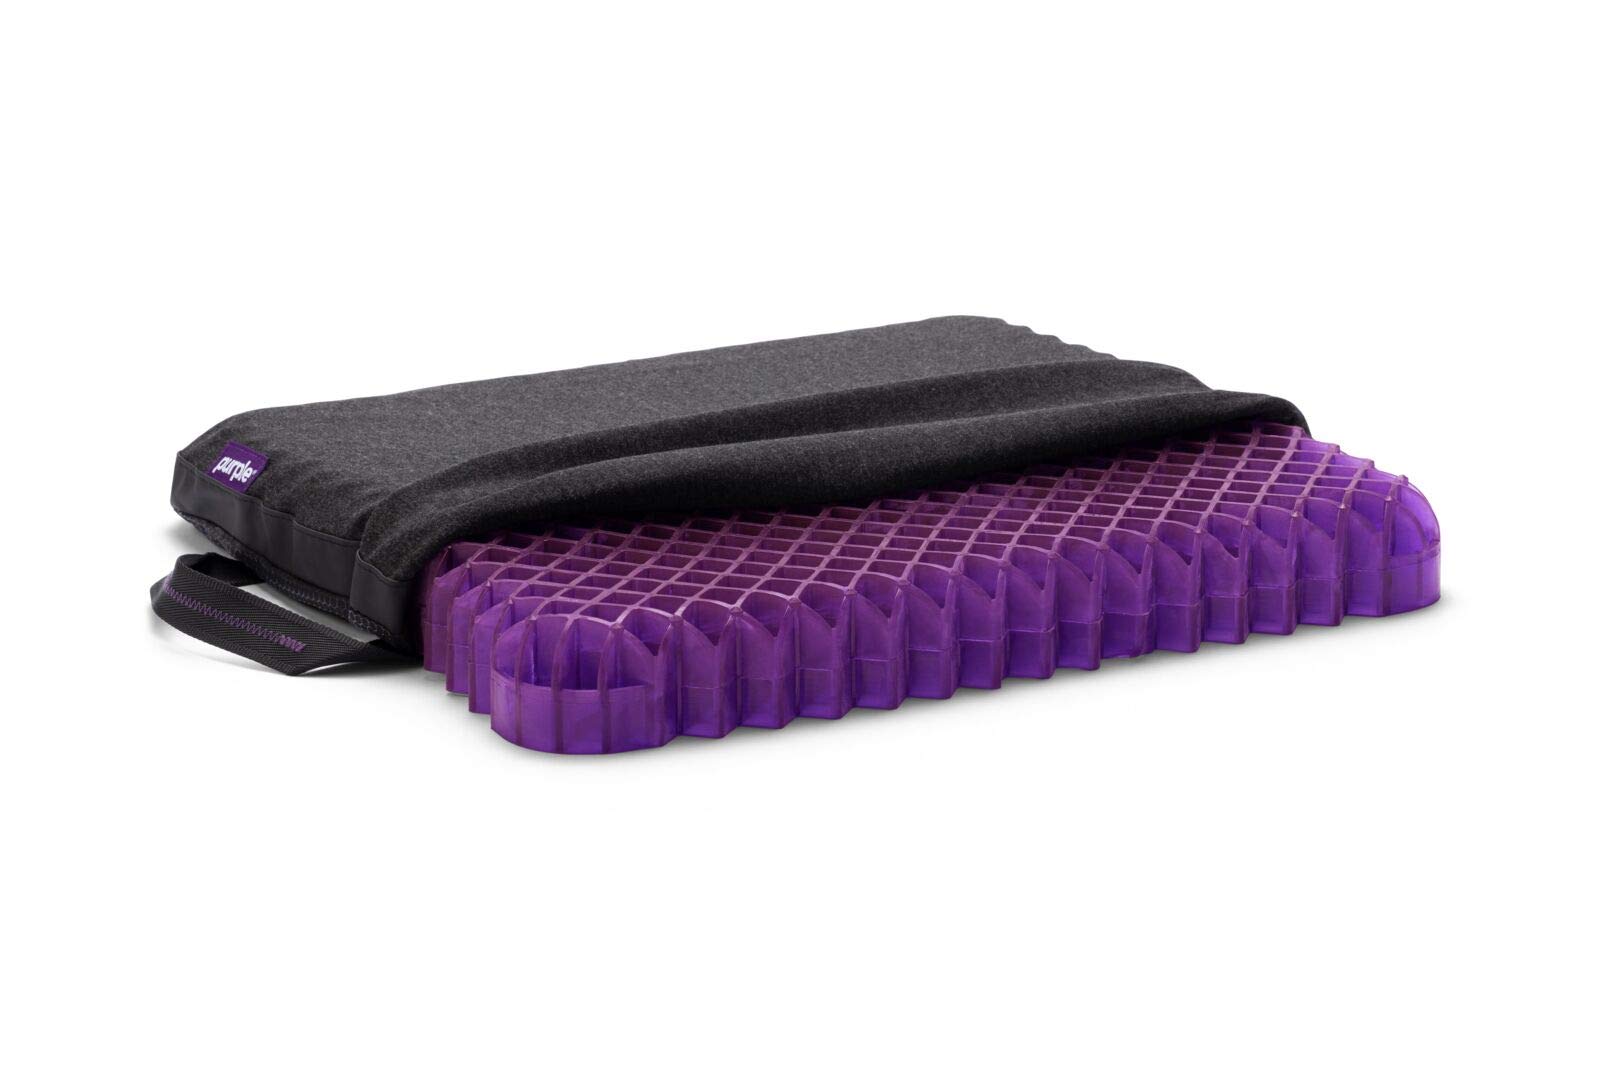 Purple Royal Seat Cushion - Seat Cushion for The Car Or Office CHAIR - Temperature Neutral Grid